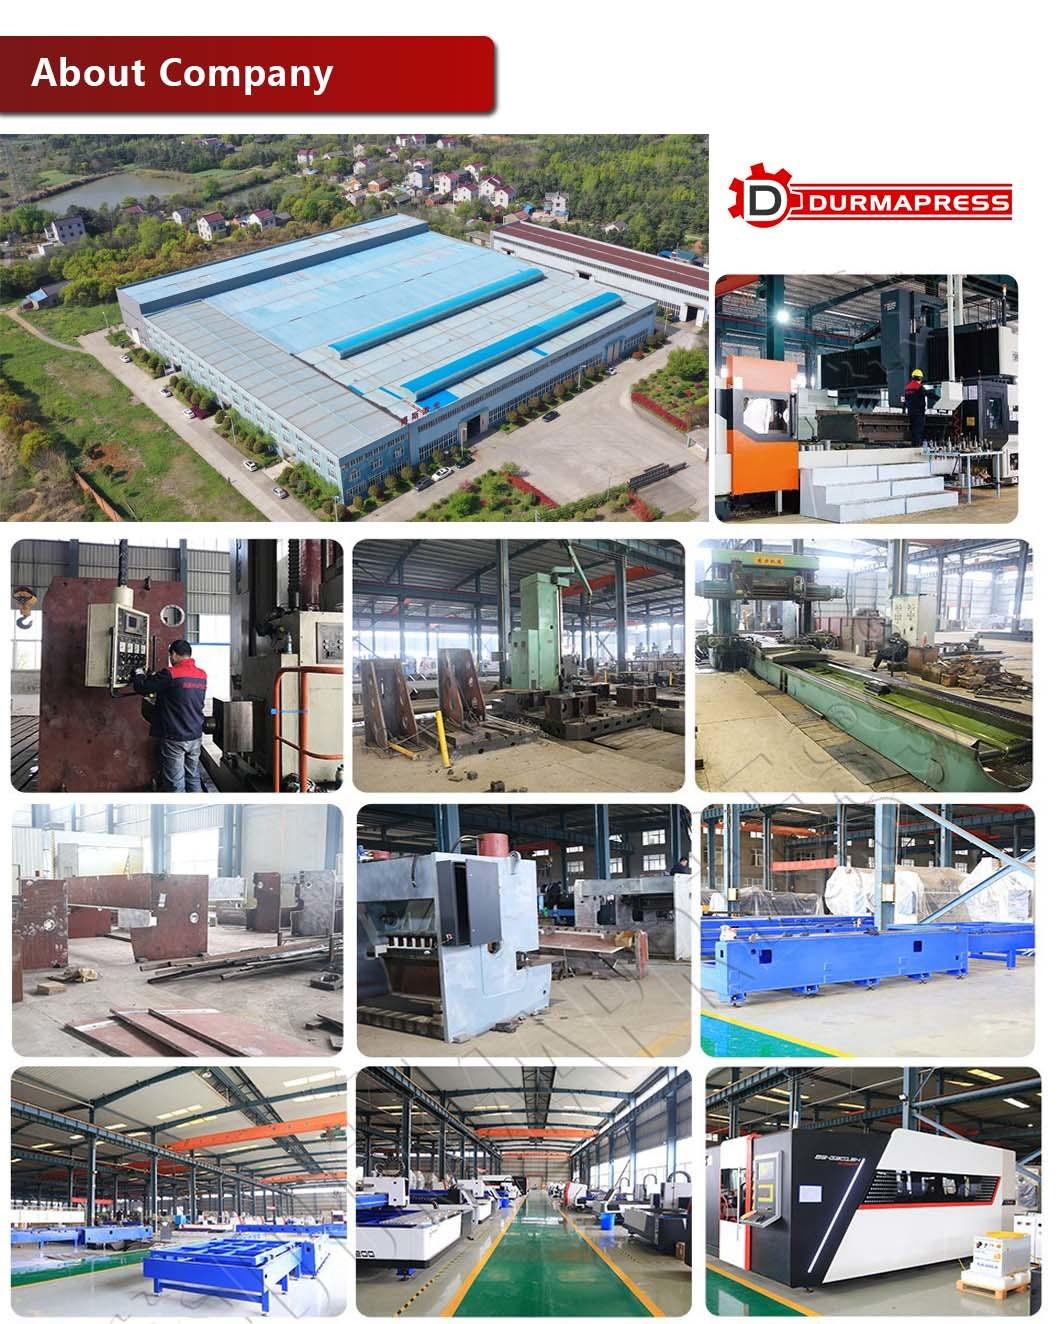 10 Feet Da53t CNC Press Brake 160t 4 Meters Hydraulic Bending Machine China Price